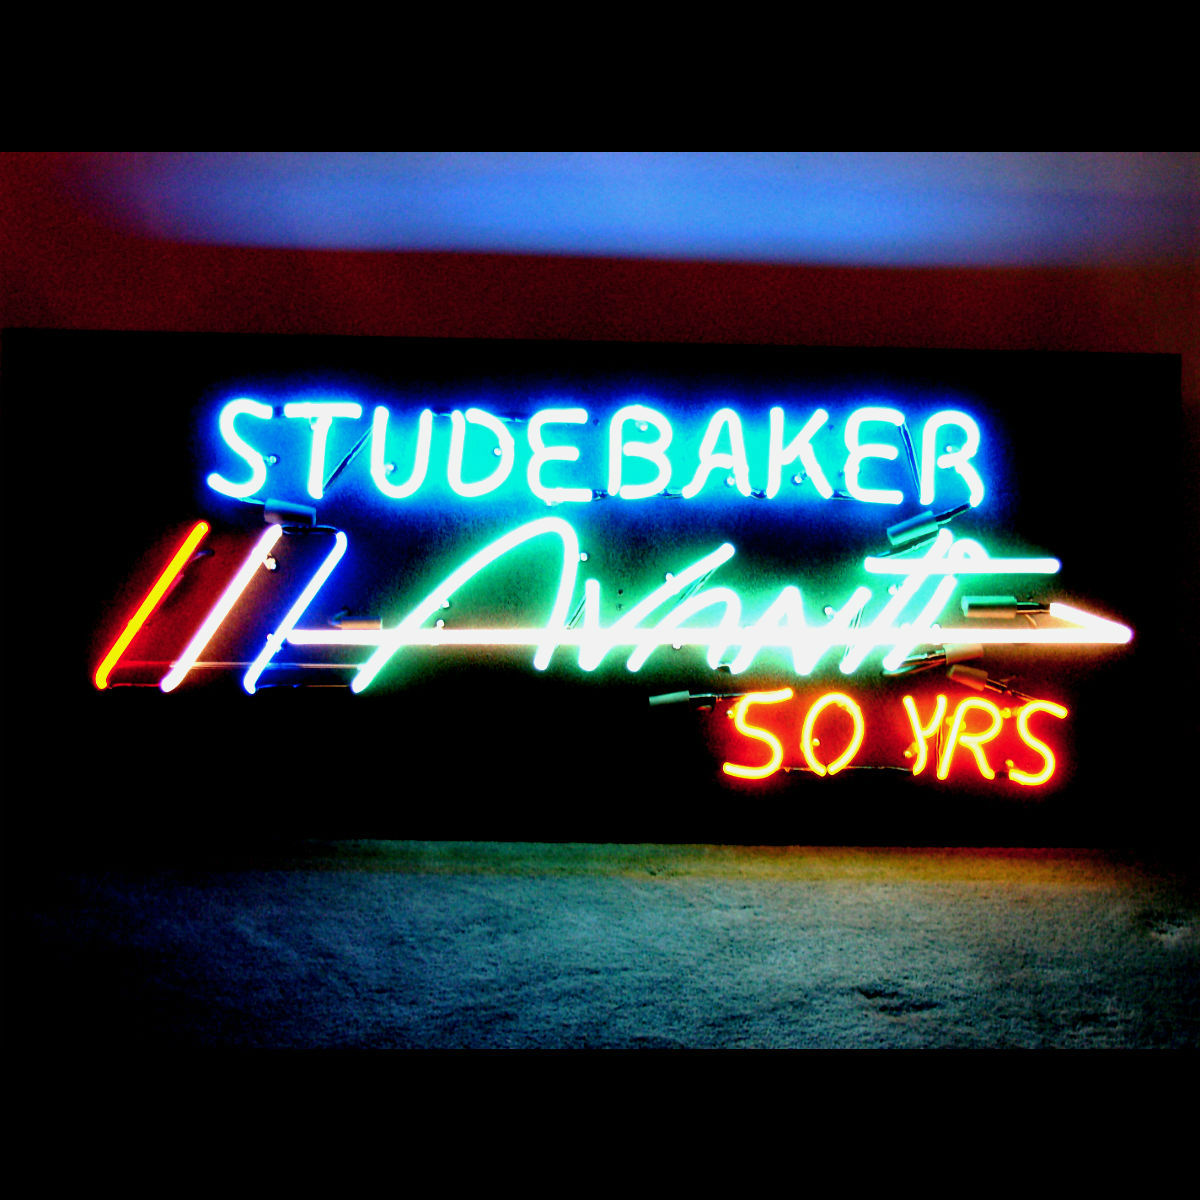 resized Studebaker Avanti 50 years.jpg